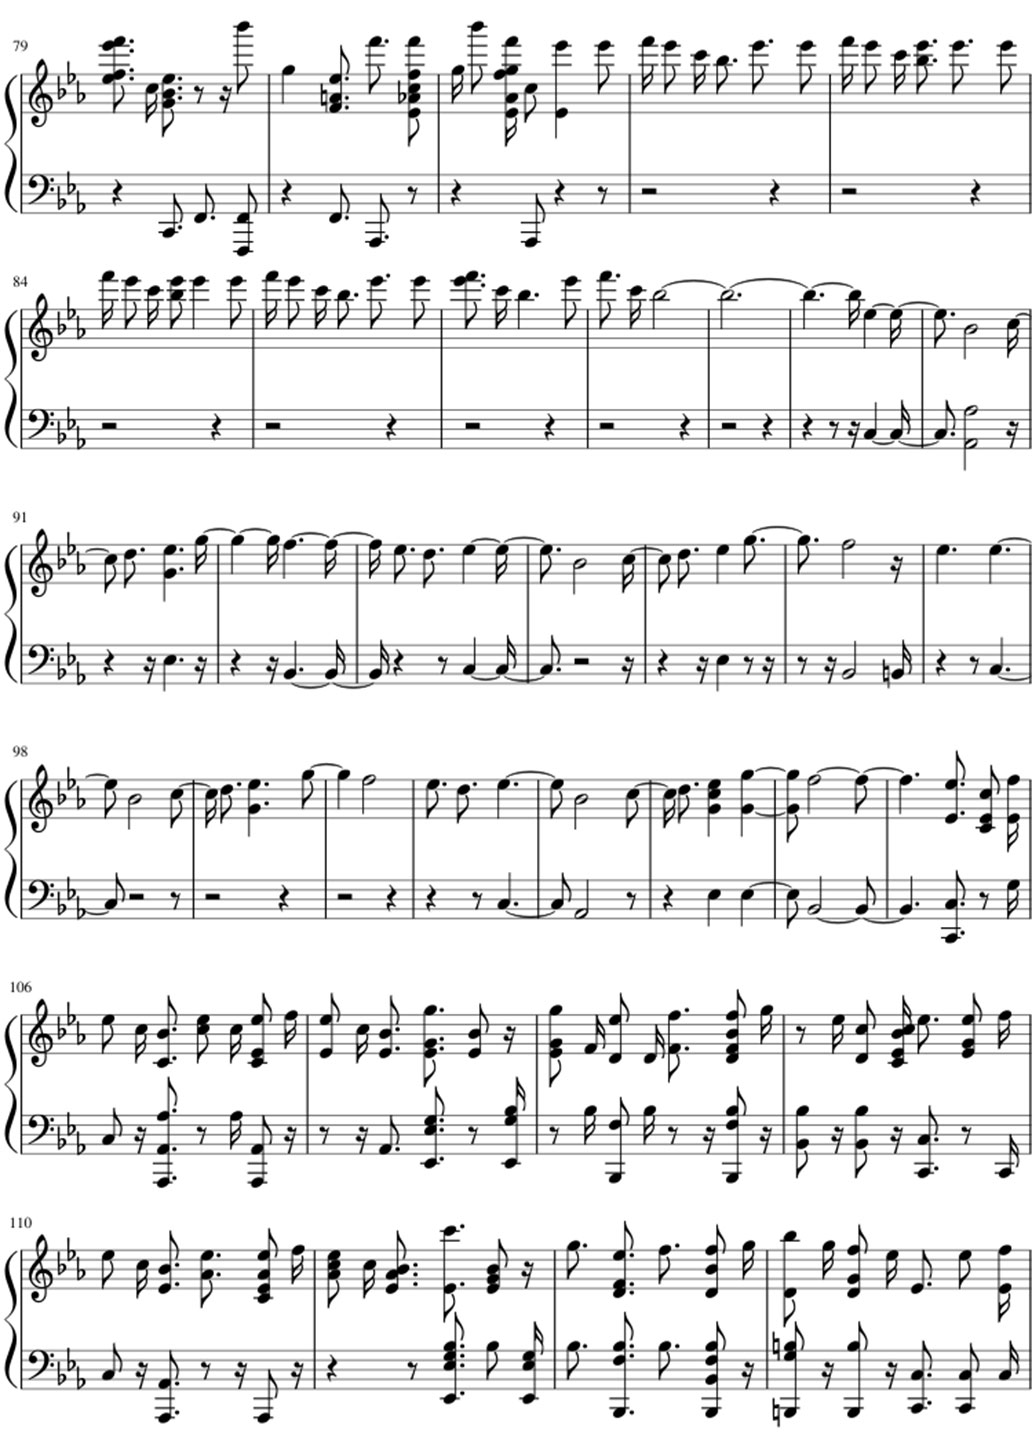 Windfall sheet music notes 4